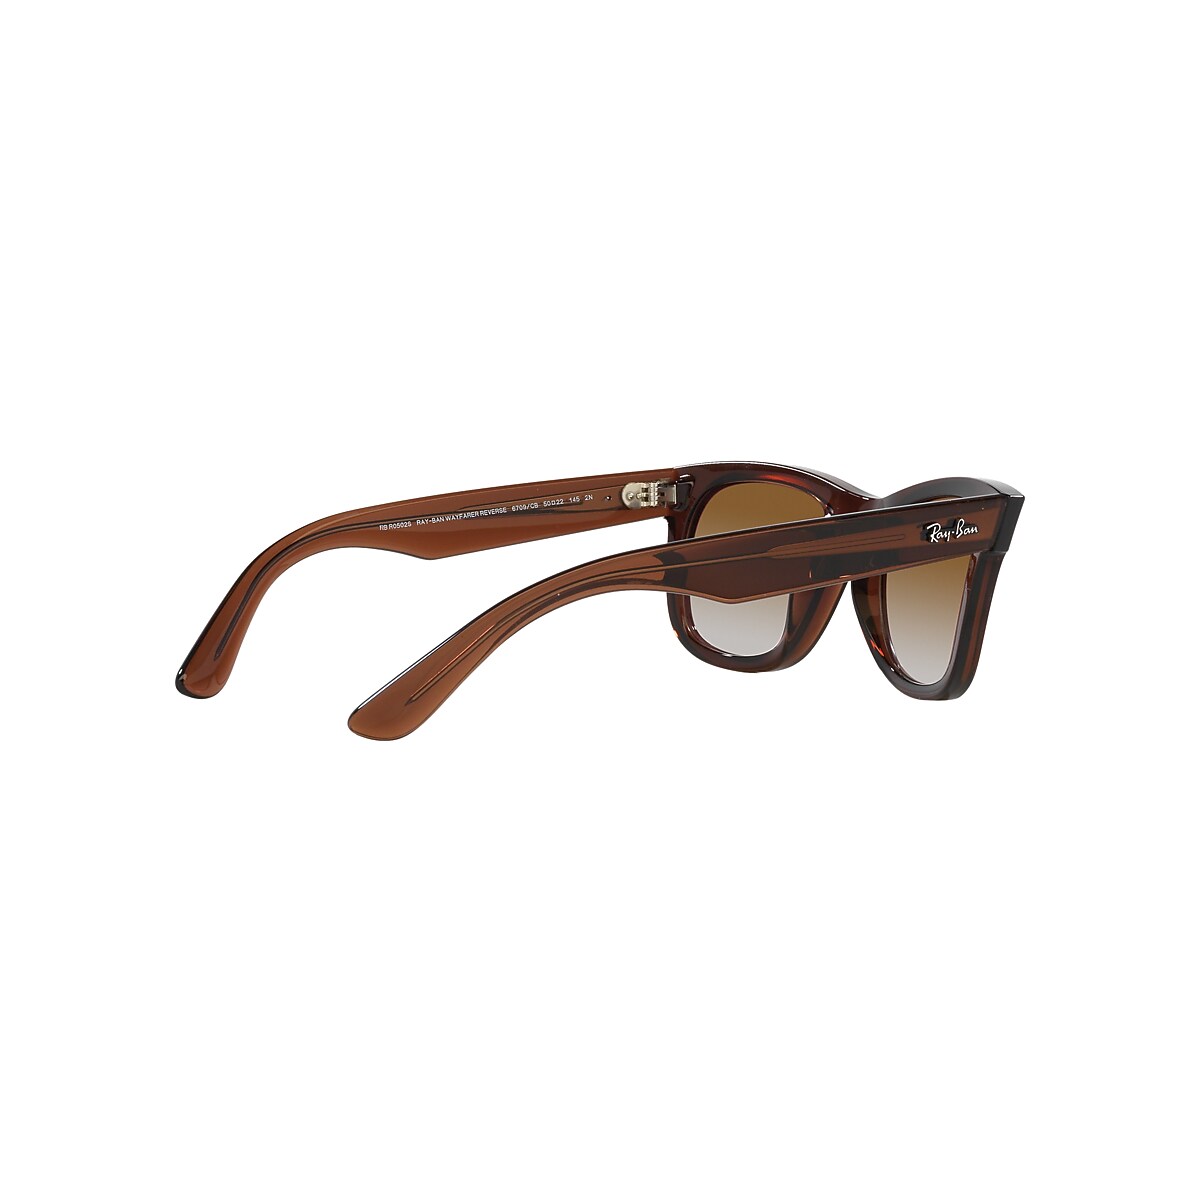 WAYFARER REVERSE Sunglasses in Transparent Brown and Brown - RBR0502S